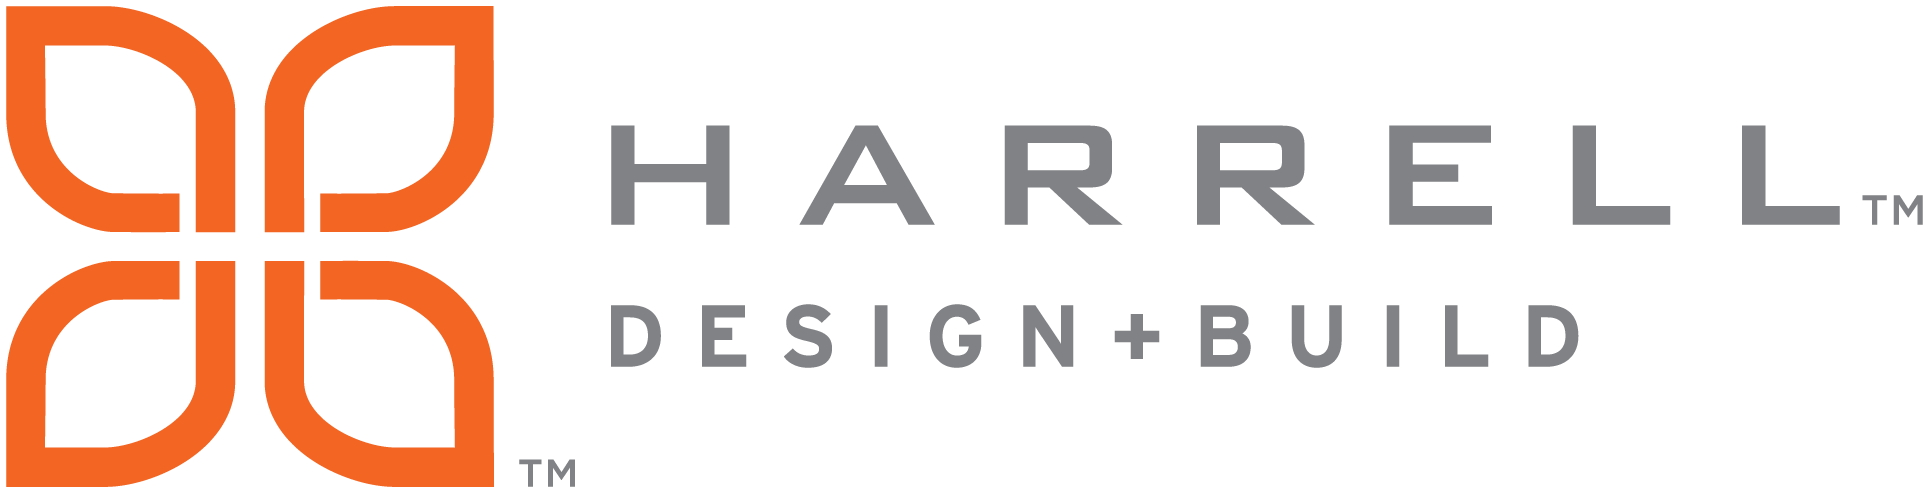 Harrell Design + Build